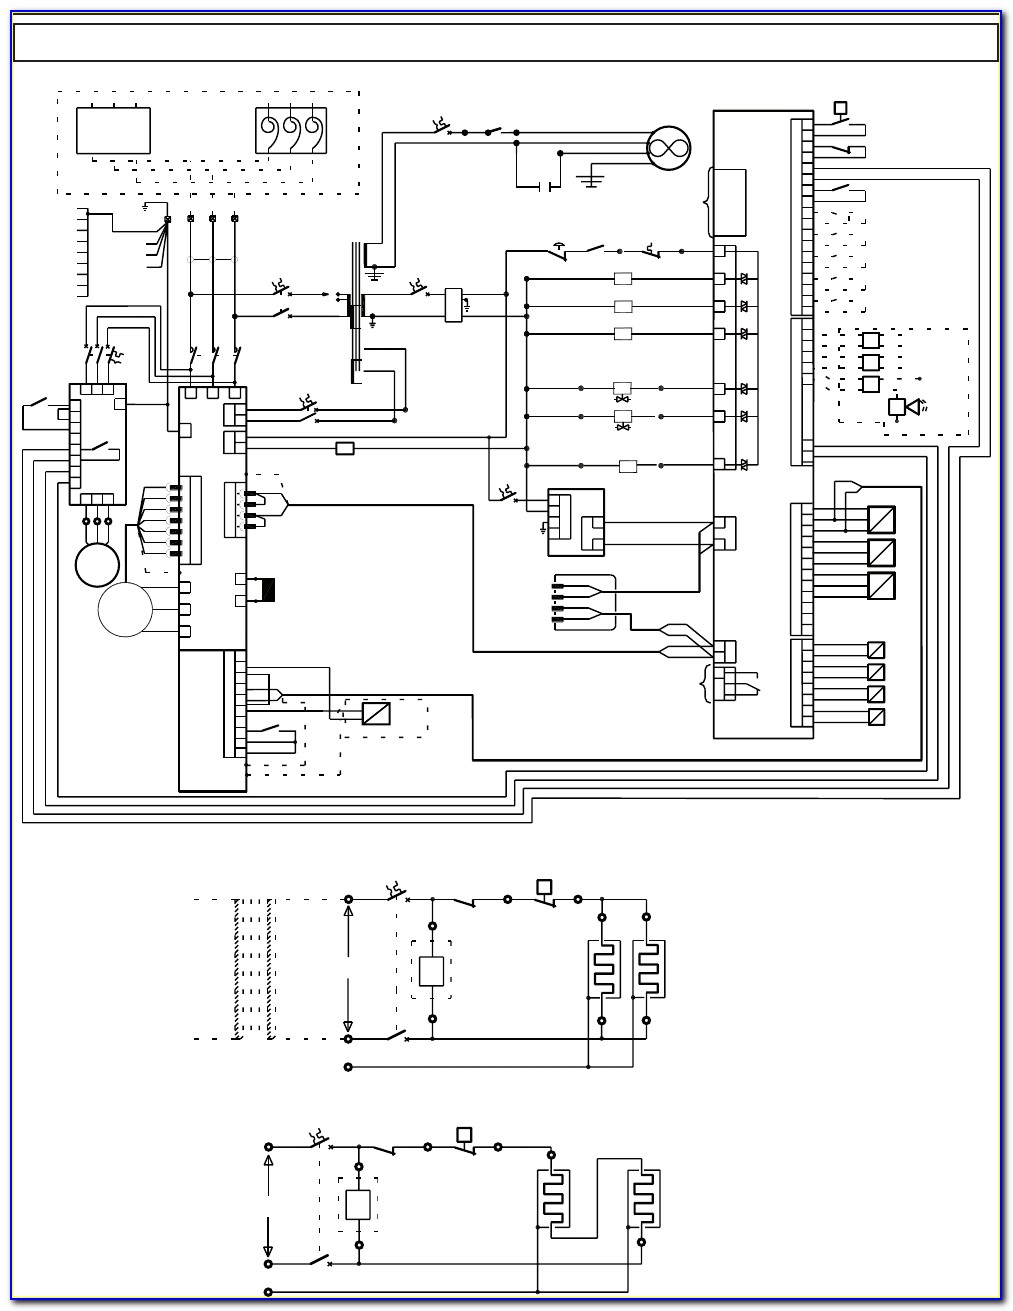 Ingersoll Rand Compressor Wiring Diagram